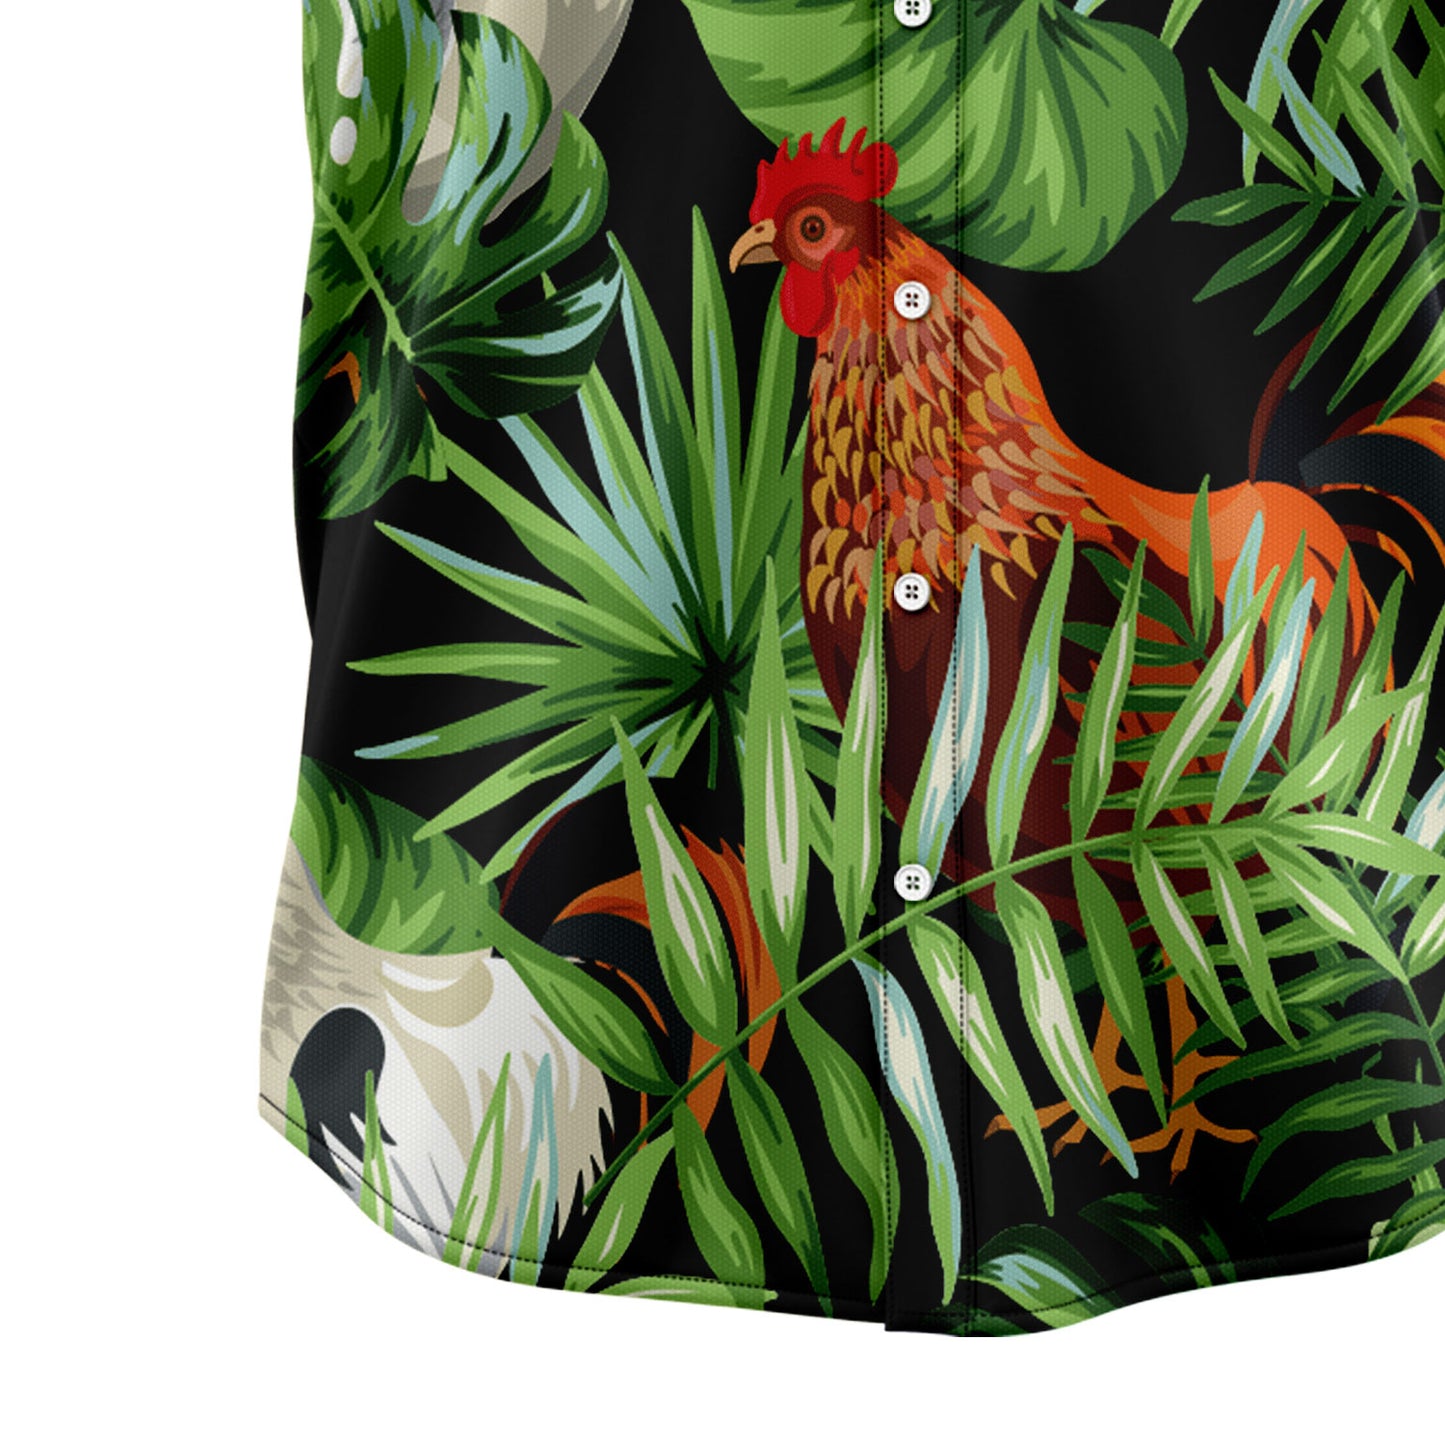 Chicken Green Tropical Leaves G5702 Hawaiian Shirt